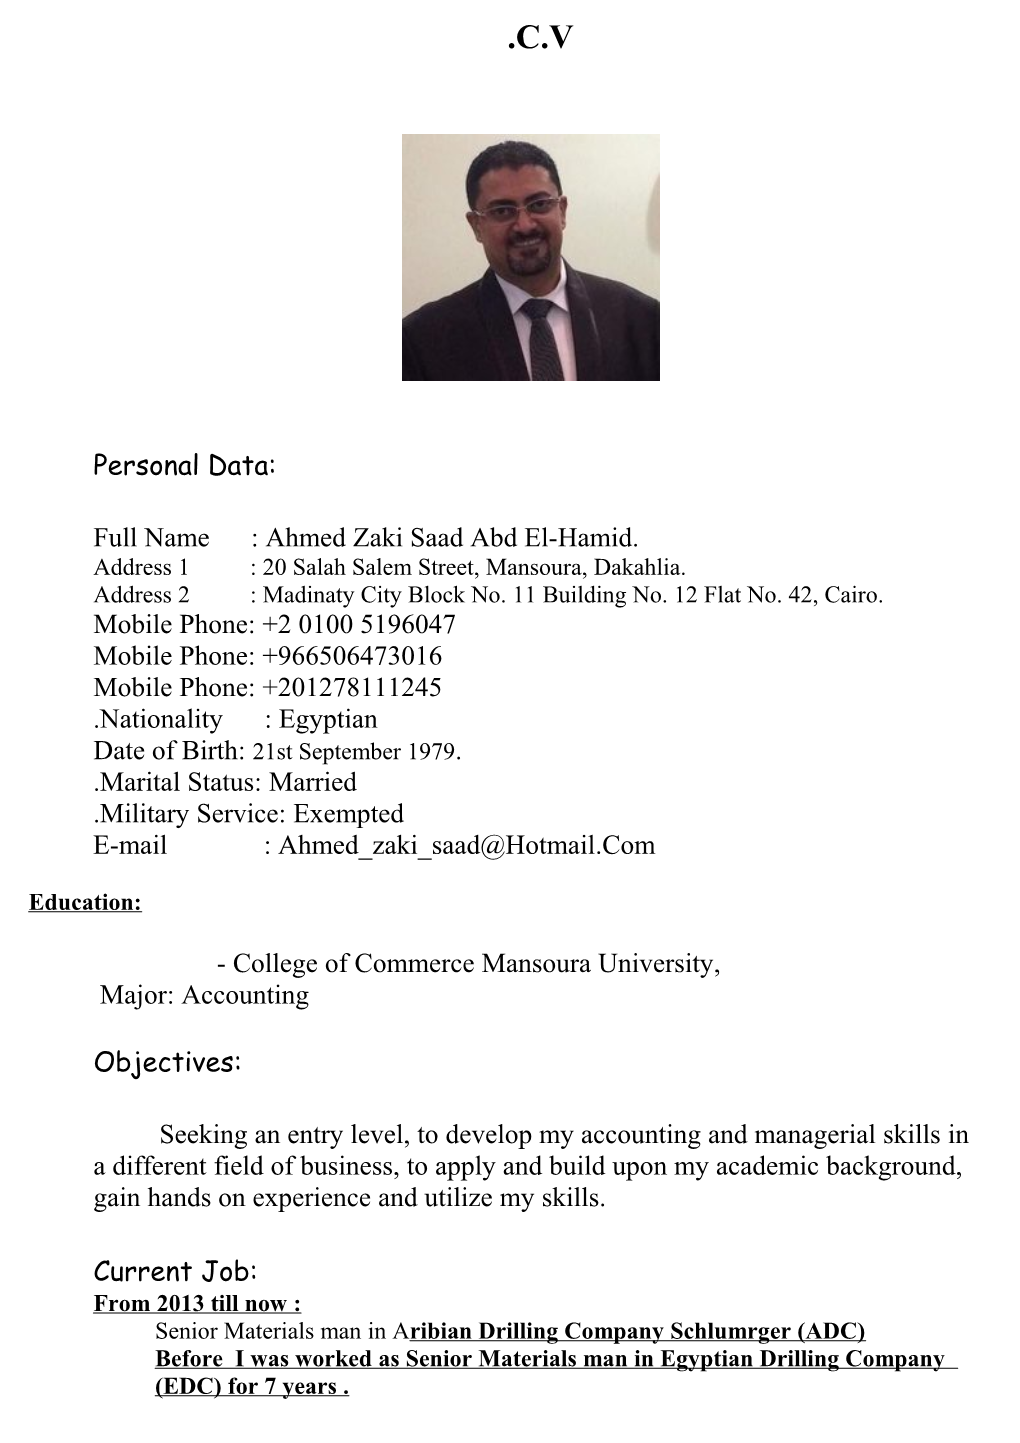 Full Name : Ahmed Zaki Saad Abd El-Hamid